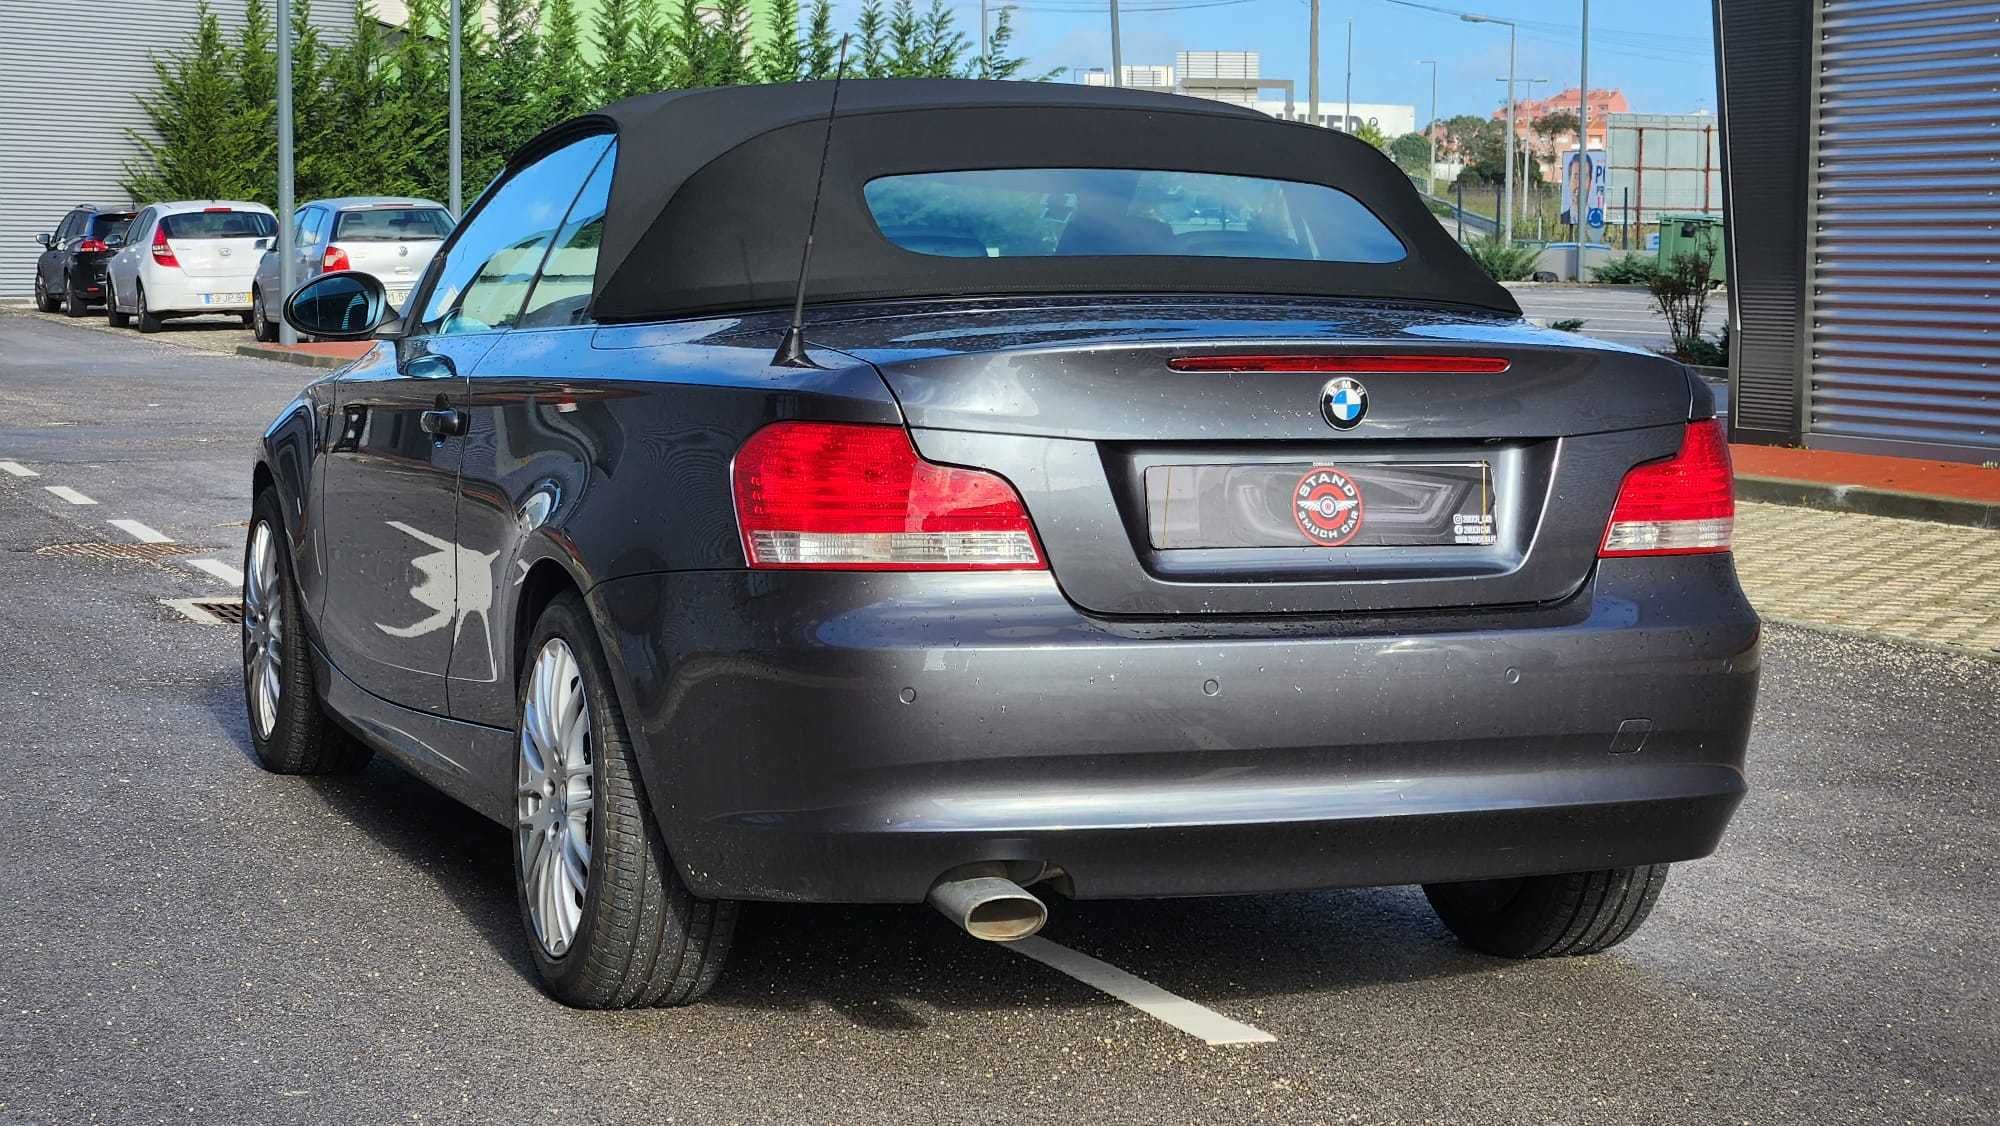 BMW 120d Cabrio c/Full Extras c/Garantia(18 meses) 216€/Mês